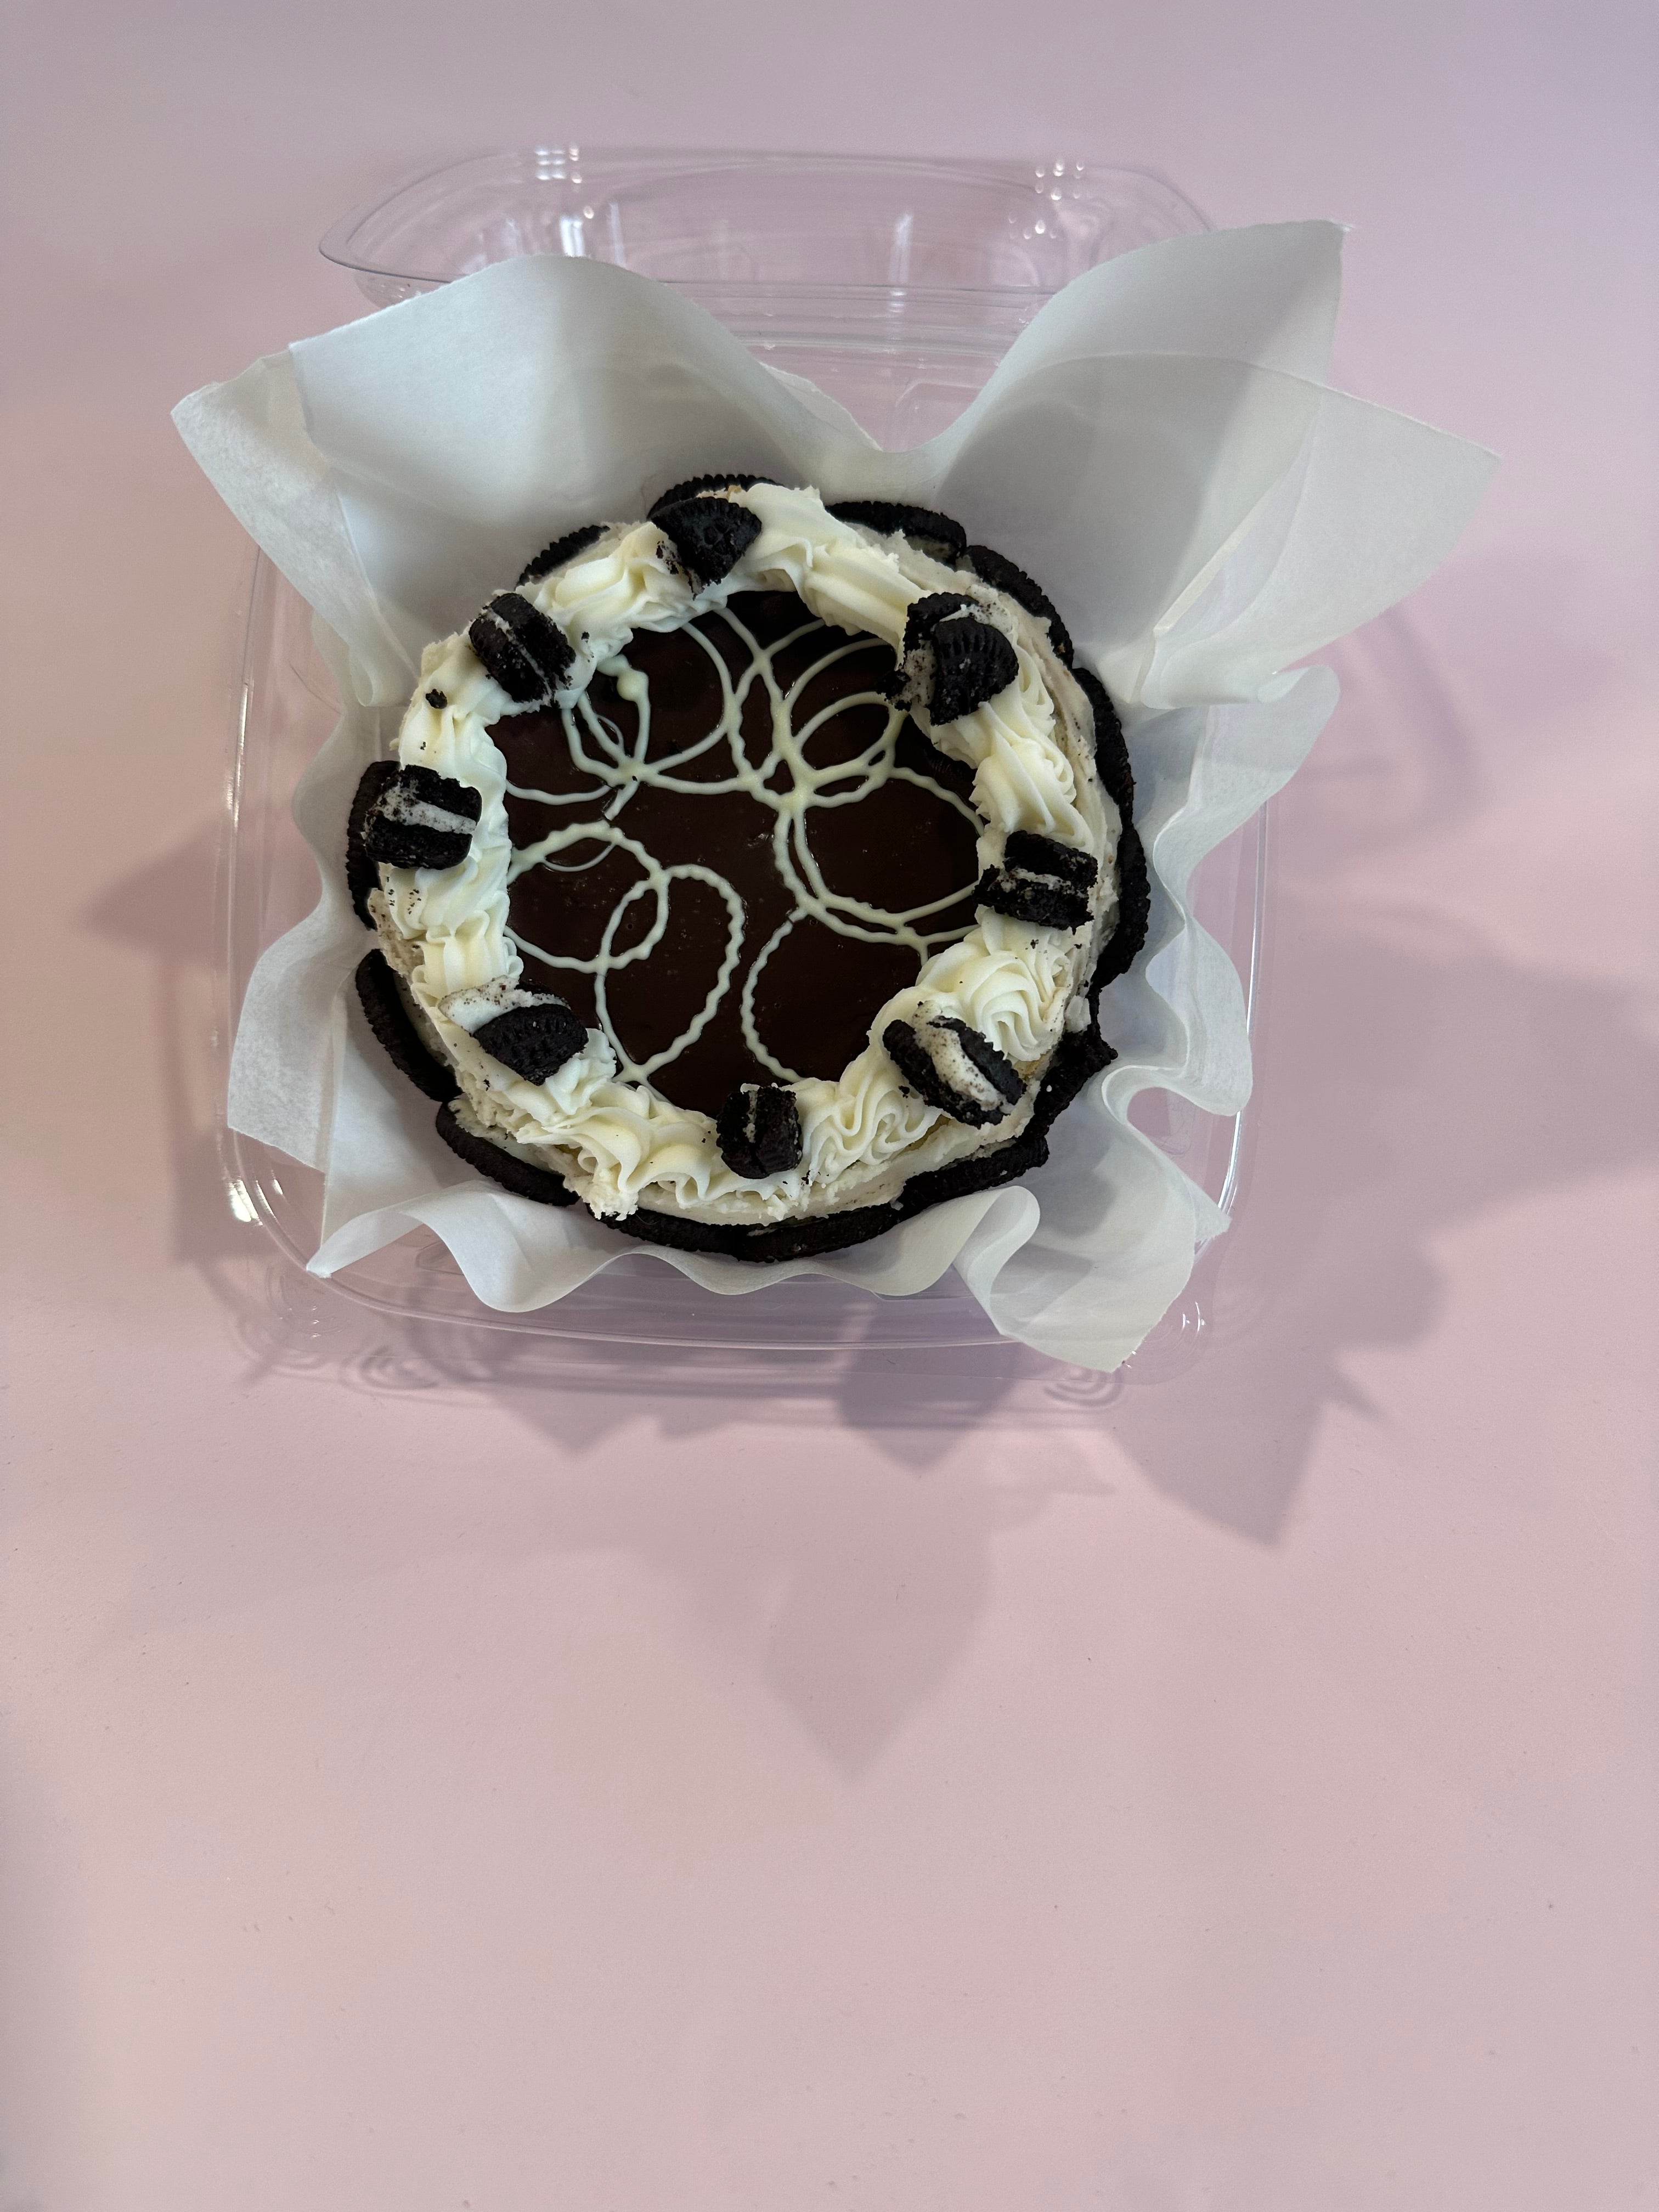 4” Oreo Cheesecake